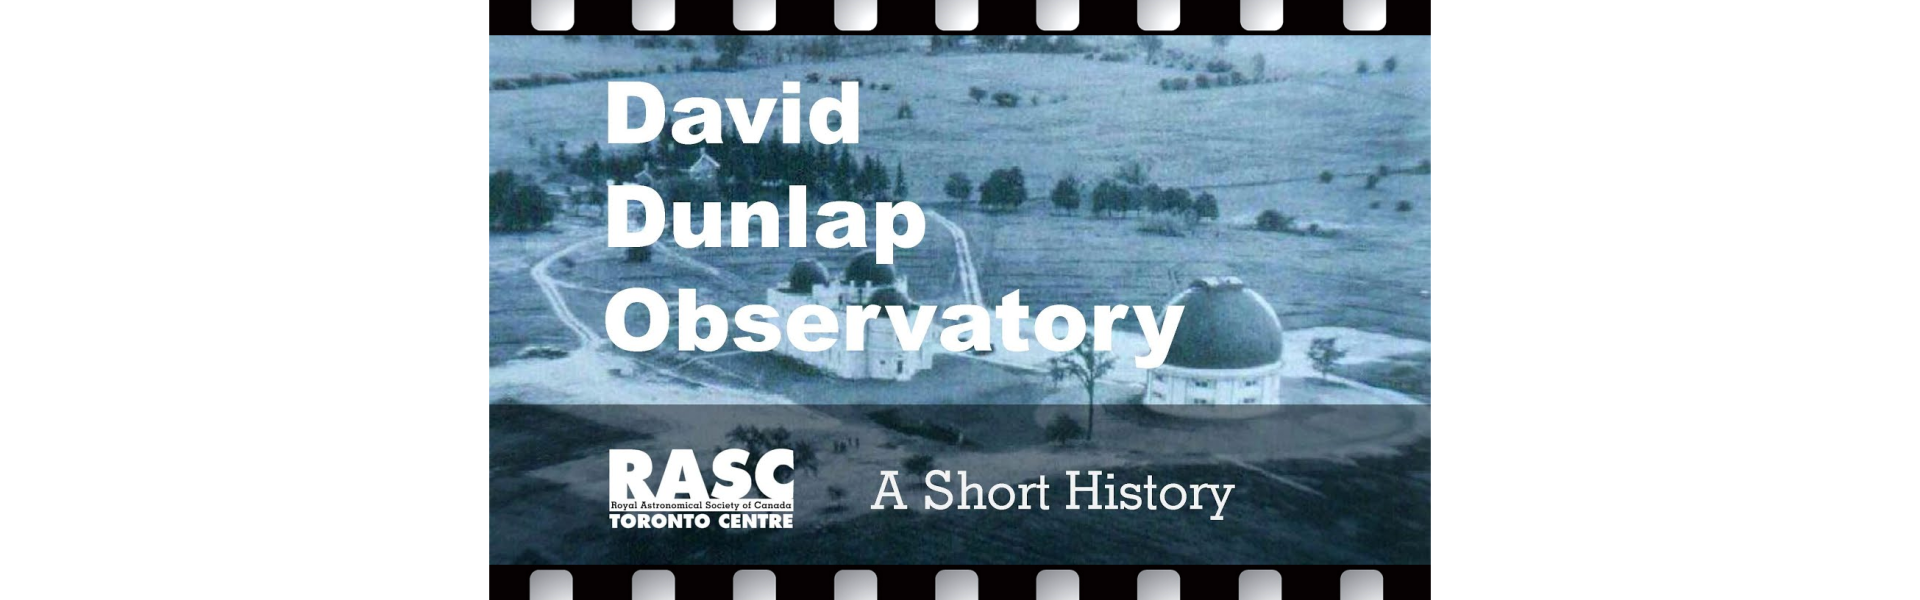 A Short History of the David Dunlap Observatory